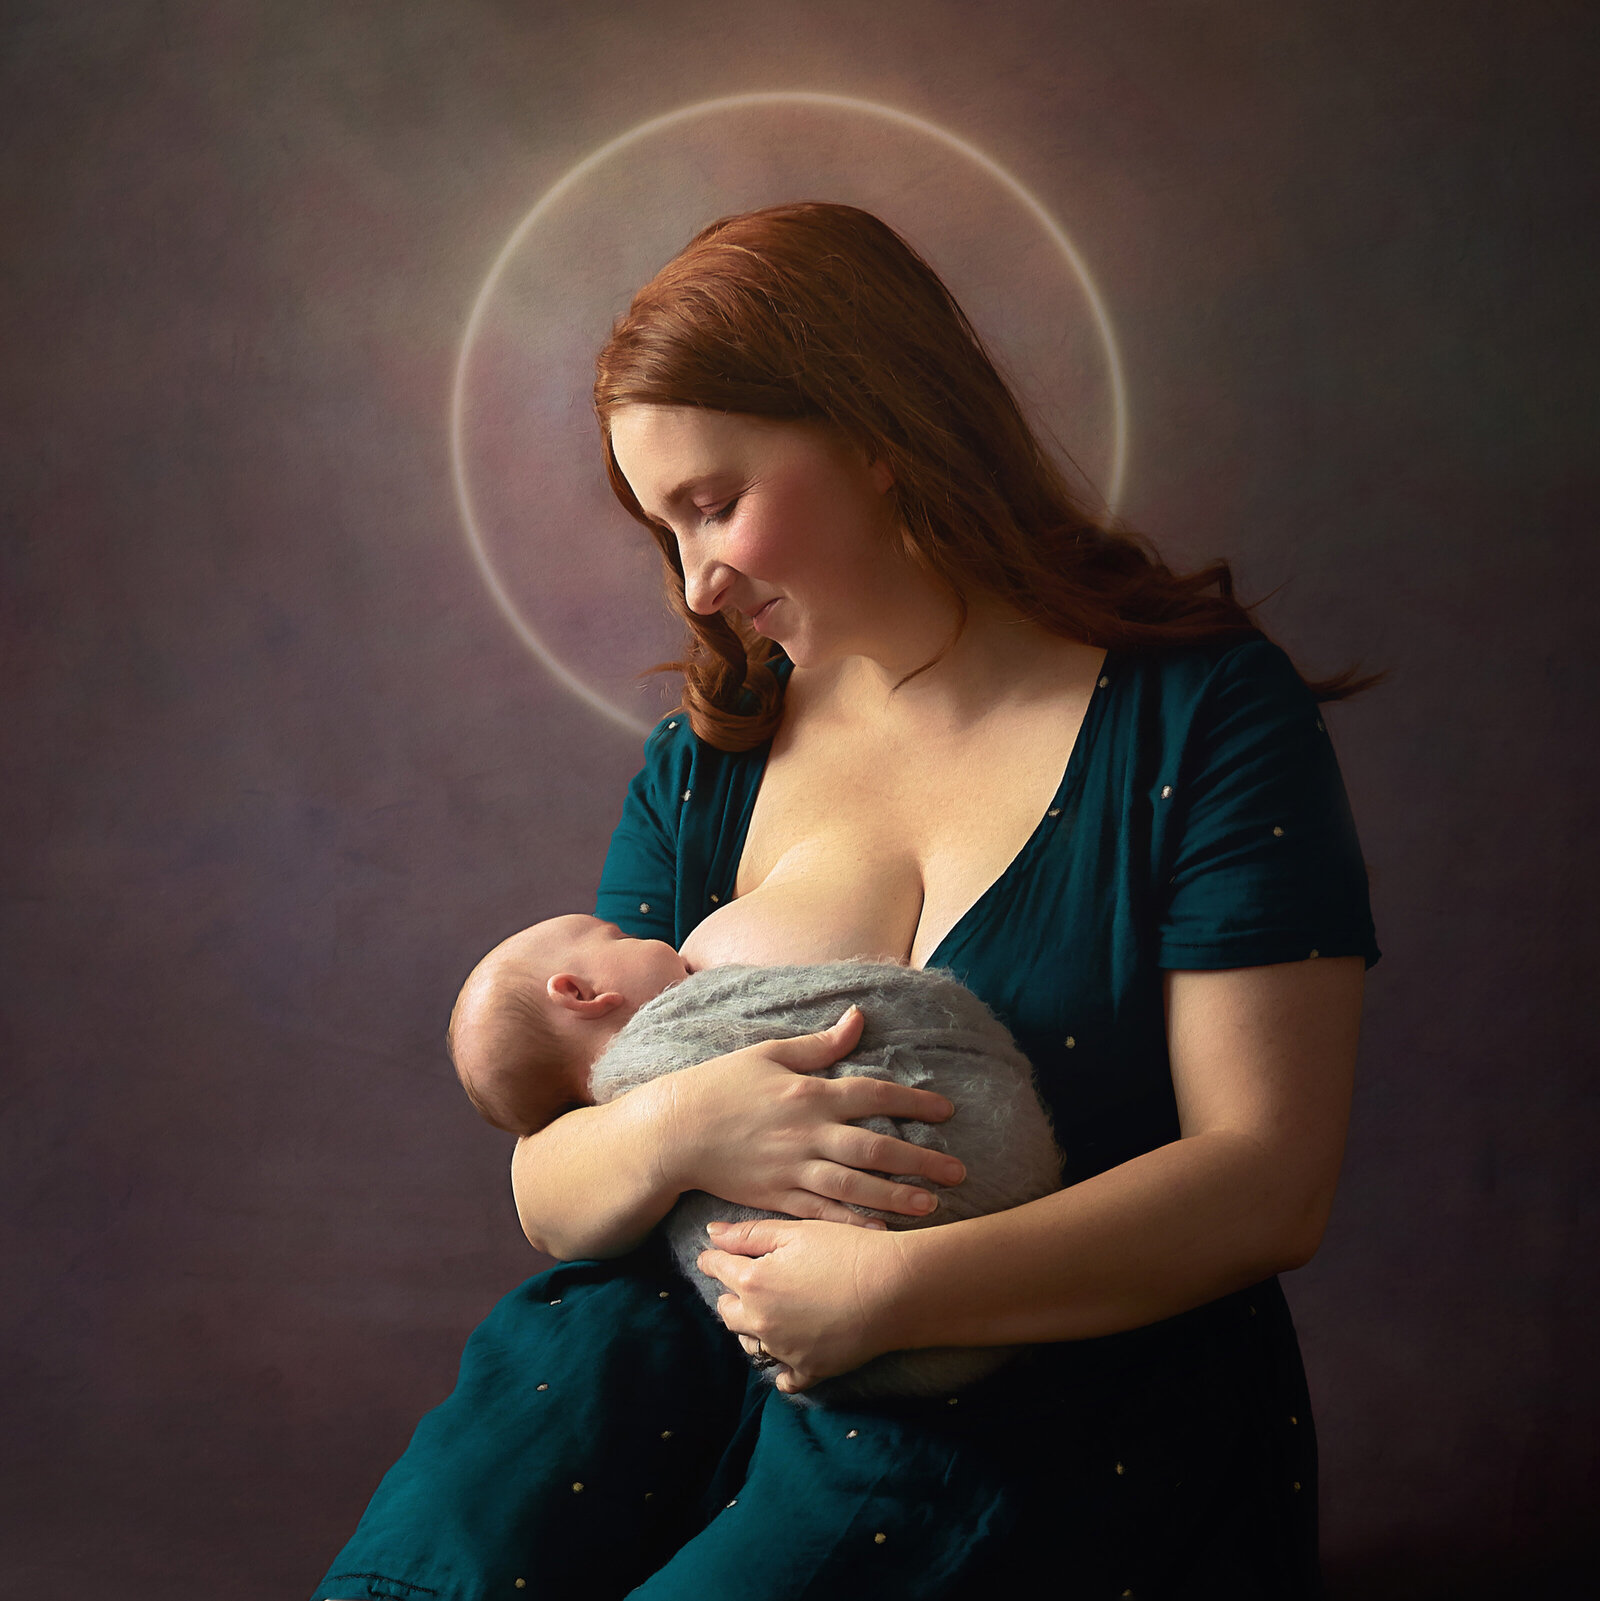 atlanta-best-award-winning-creative-artistic-mother-baby-portrait-studio-fine-art-breastfeeding-son-daughter-halo-photography-photographer-twin-rivers-01 square 2